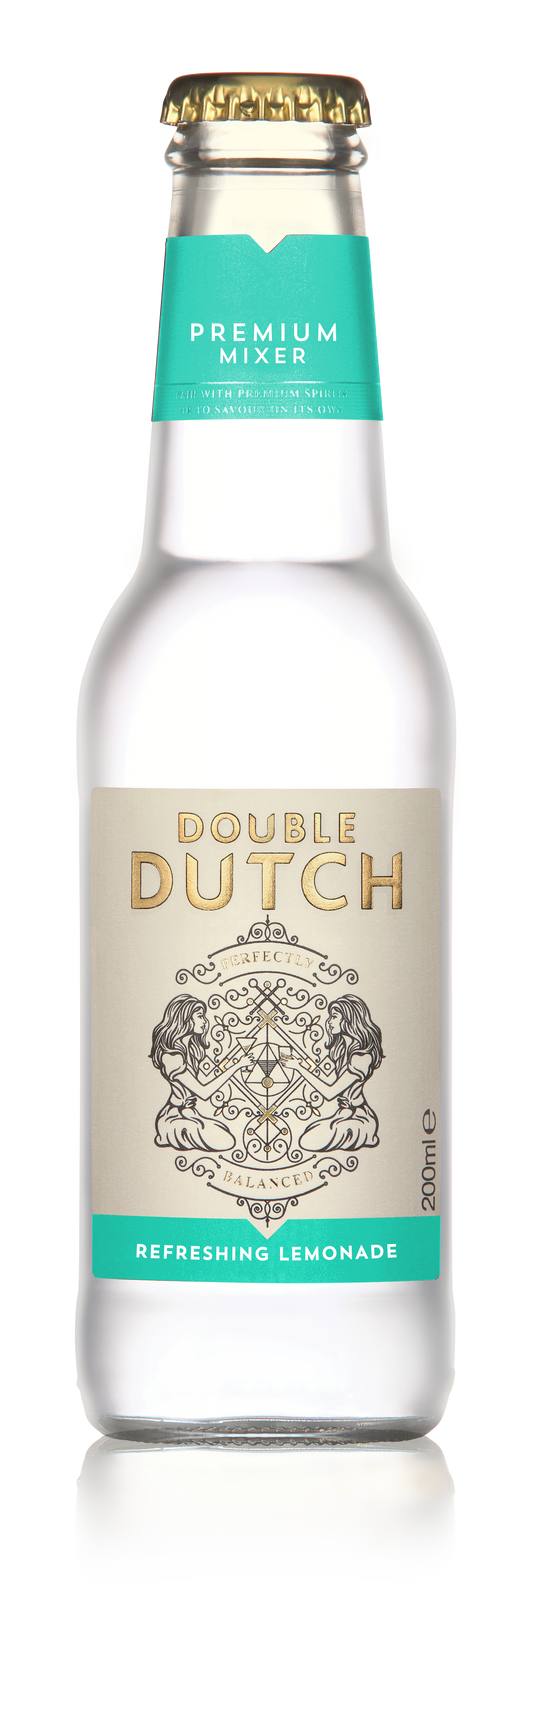 Double Dutch - Refreshing Lemonade